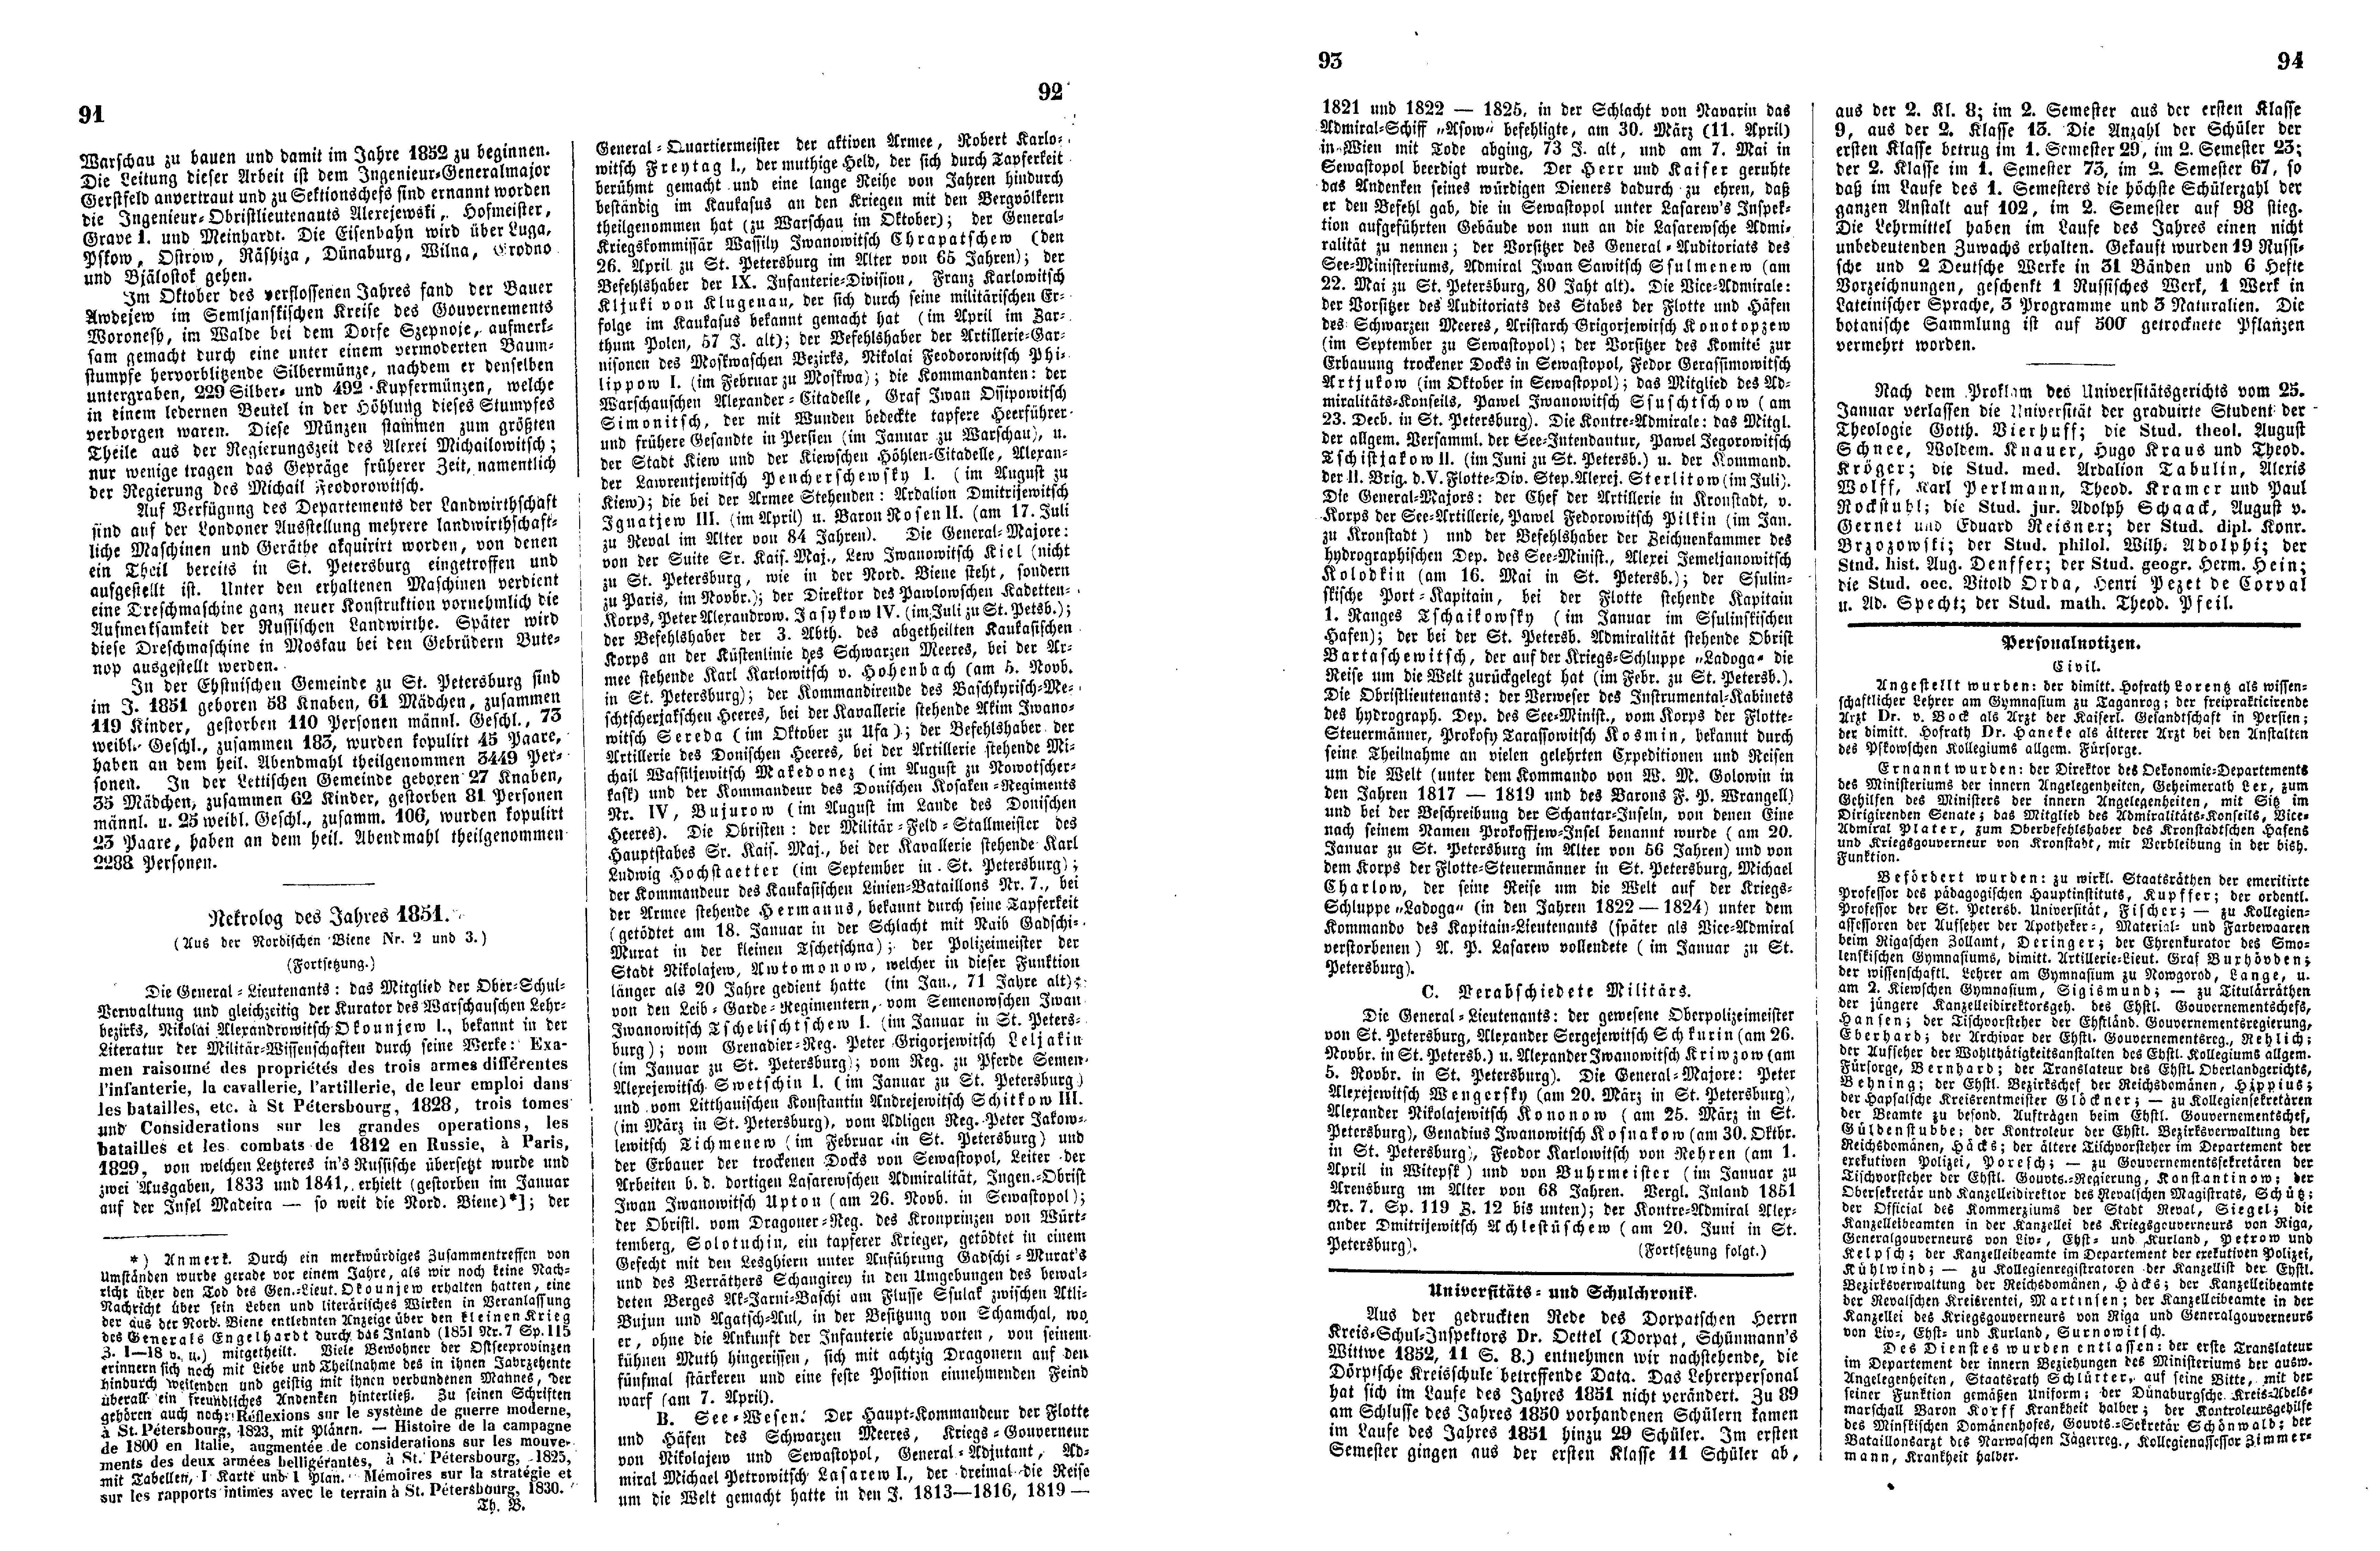 Das Inland [17] (1852) | 27. (91-94) Main body of text